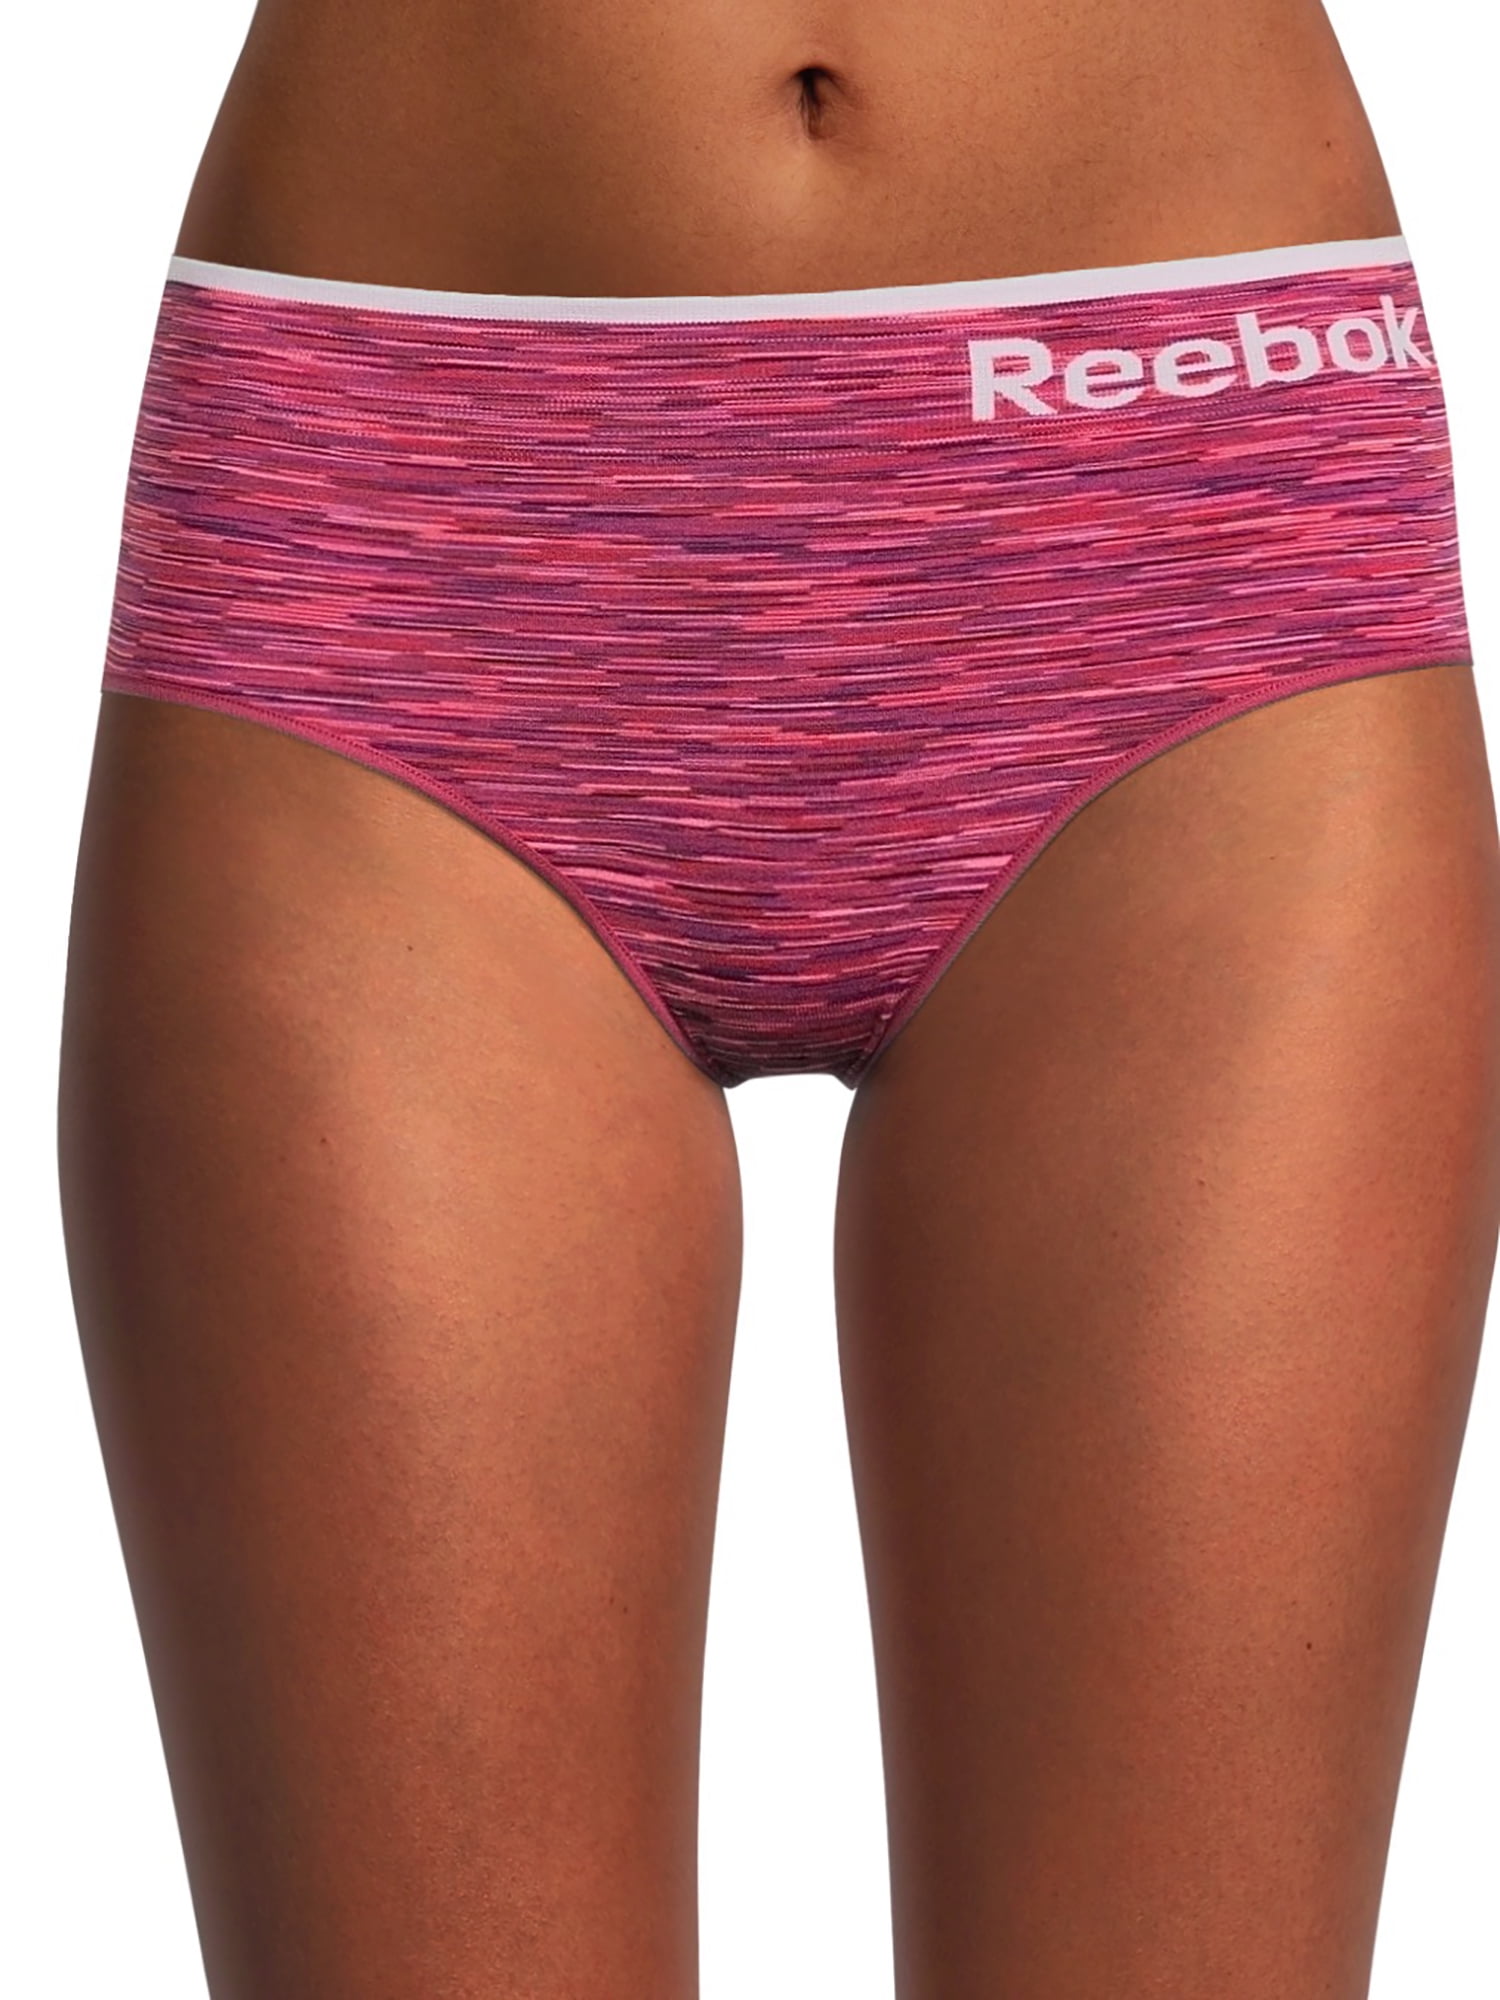 Buy Reebok Women's Underwear – No Show Lightweight Hipster Briefs (3 Pack),  Black/Pink/Rose Dust, X-Large at